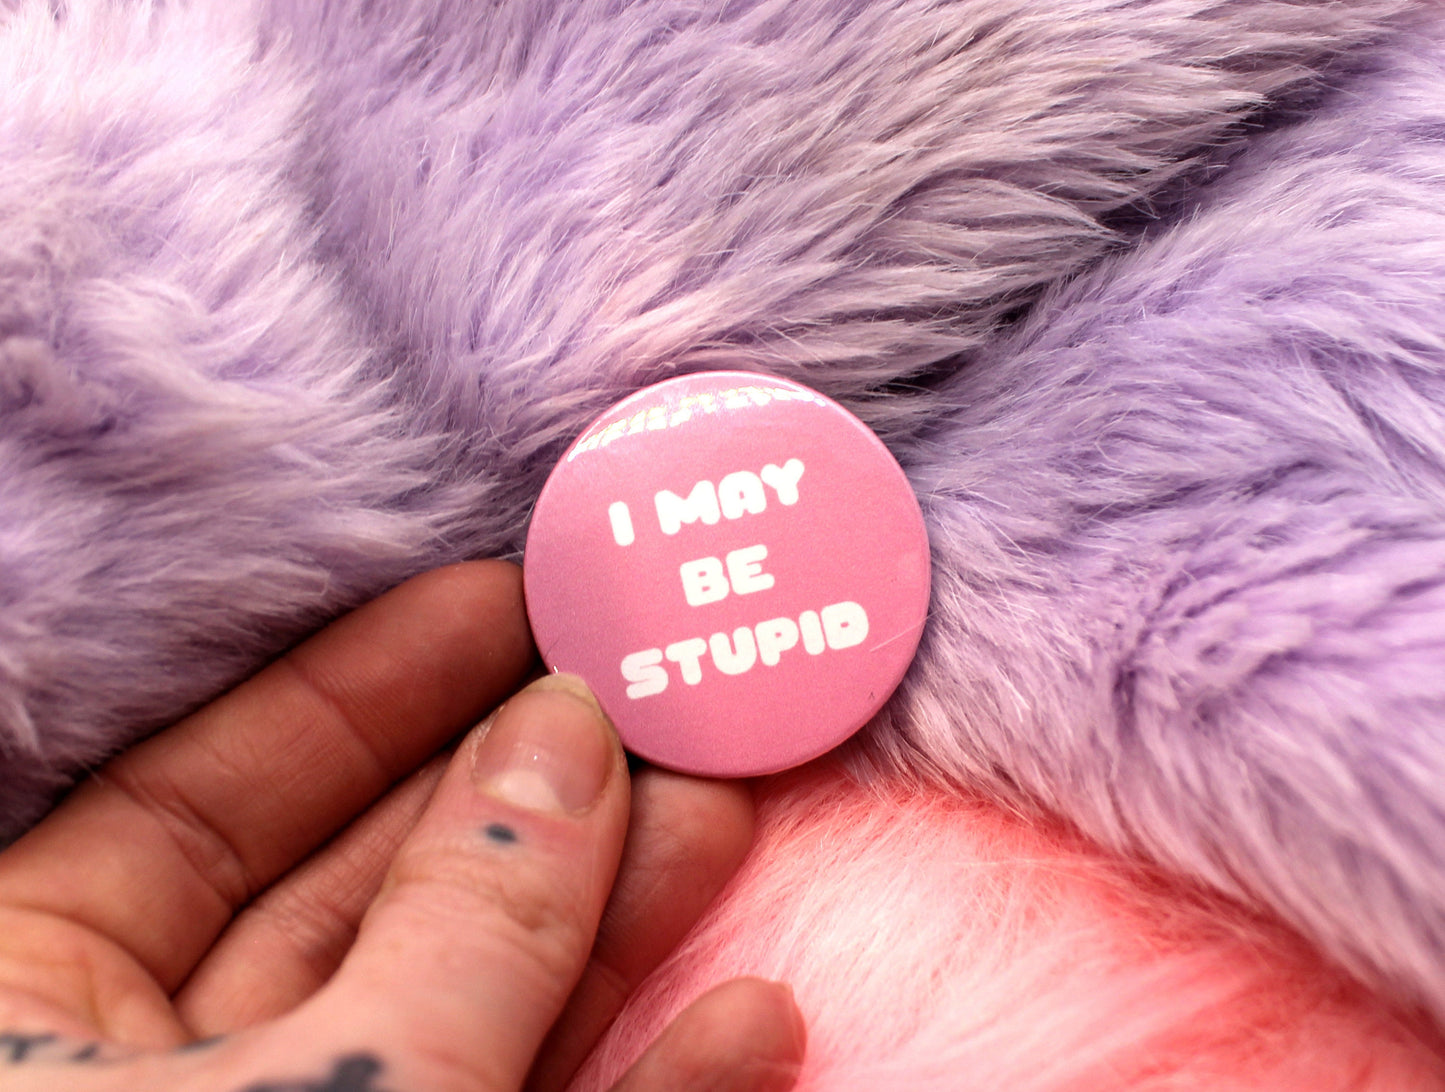 I May Be Stupid Badges (38mm) - Pink and Black set